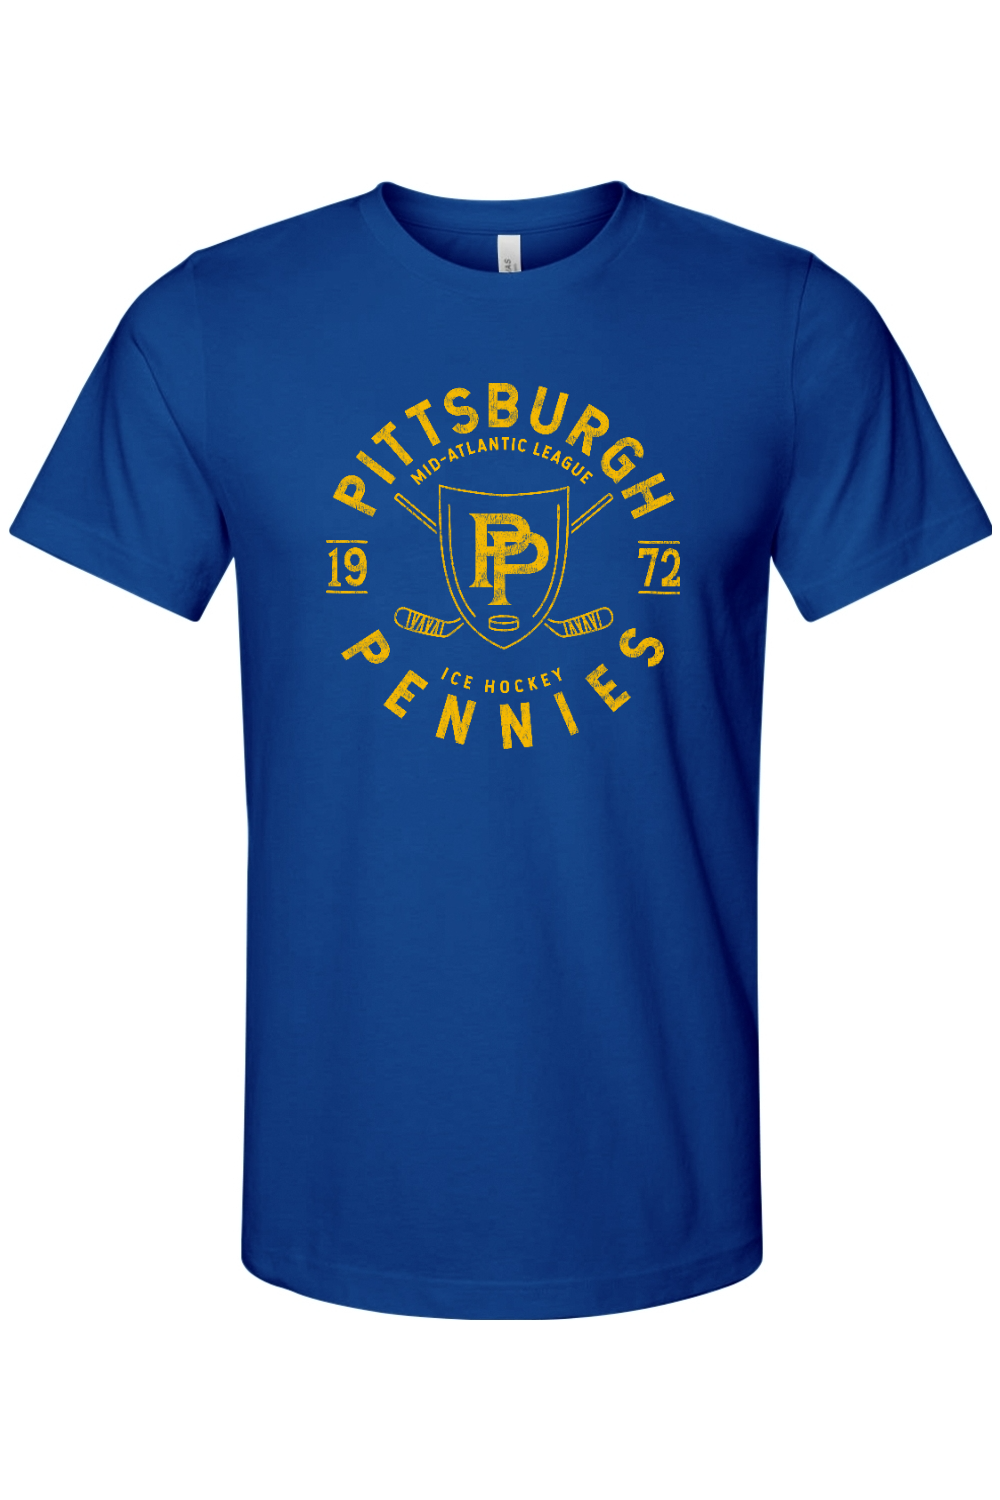 Pittsburgh Pennies - Bella + Canvas Jersey Tee - Yinzylvania